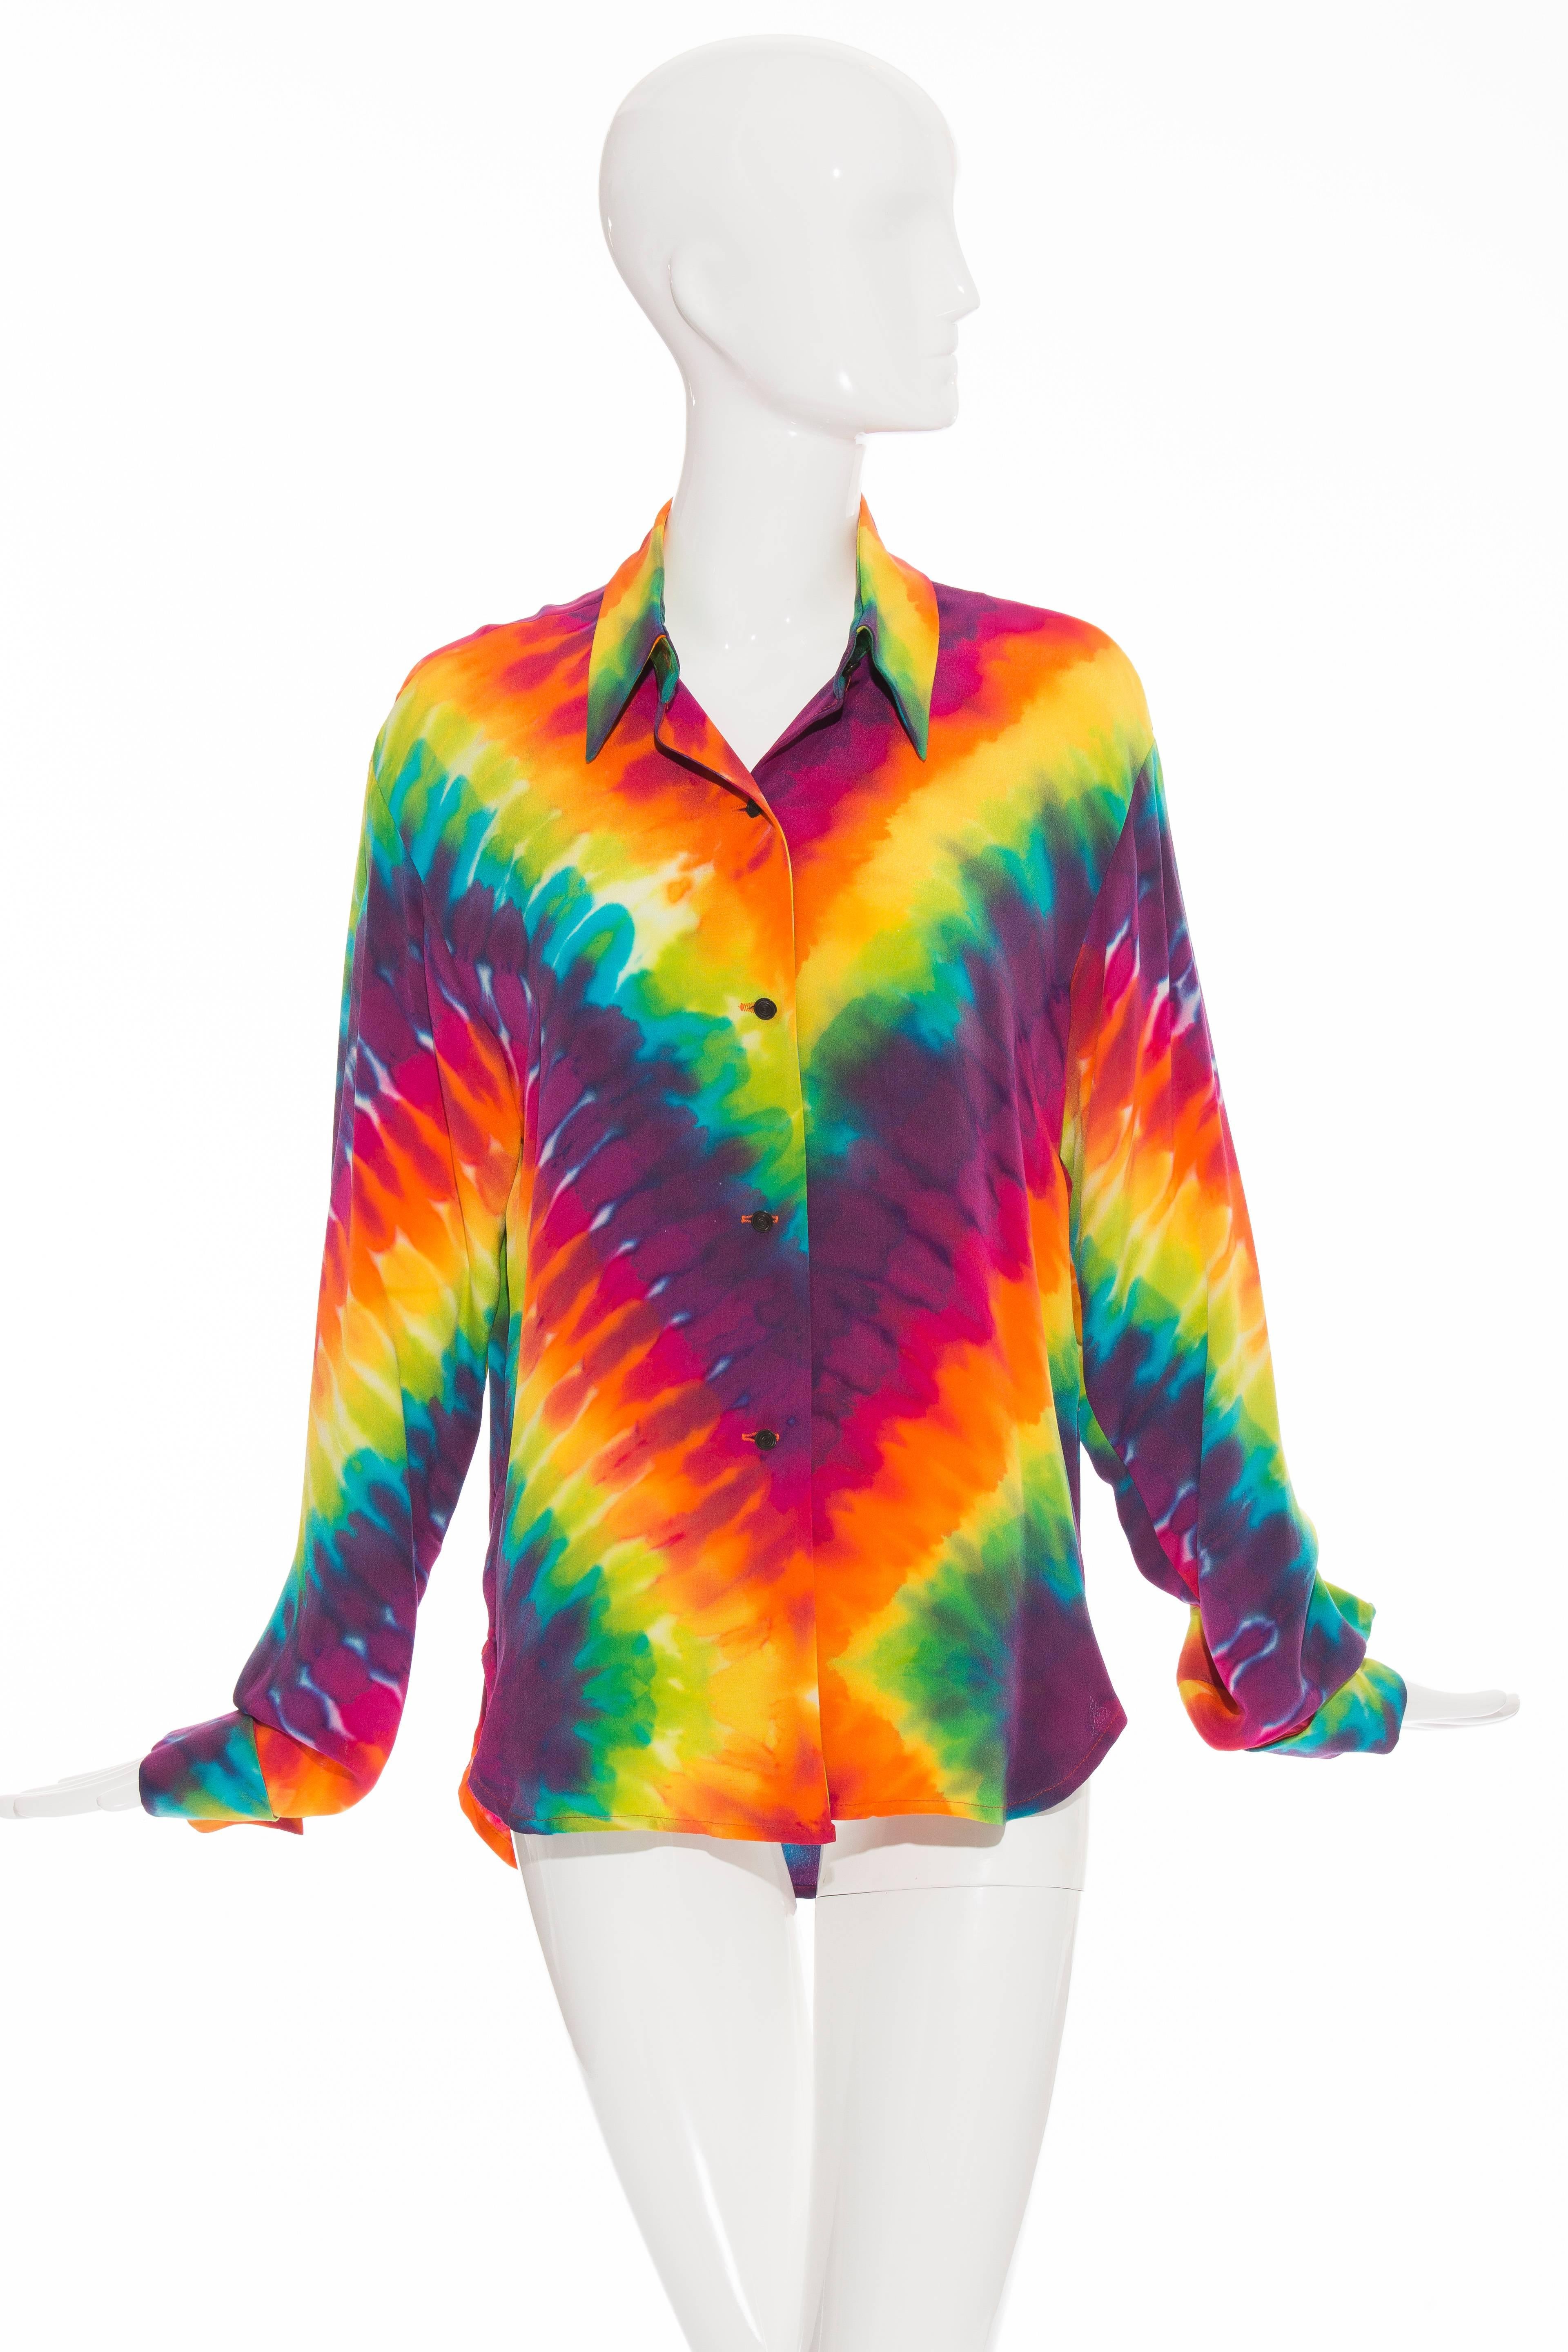 rainbow tie dye jacket